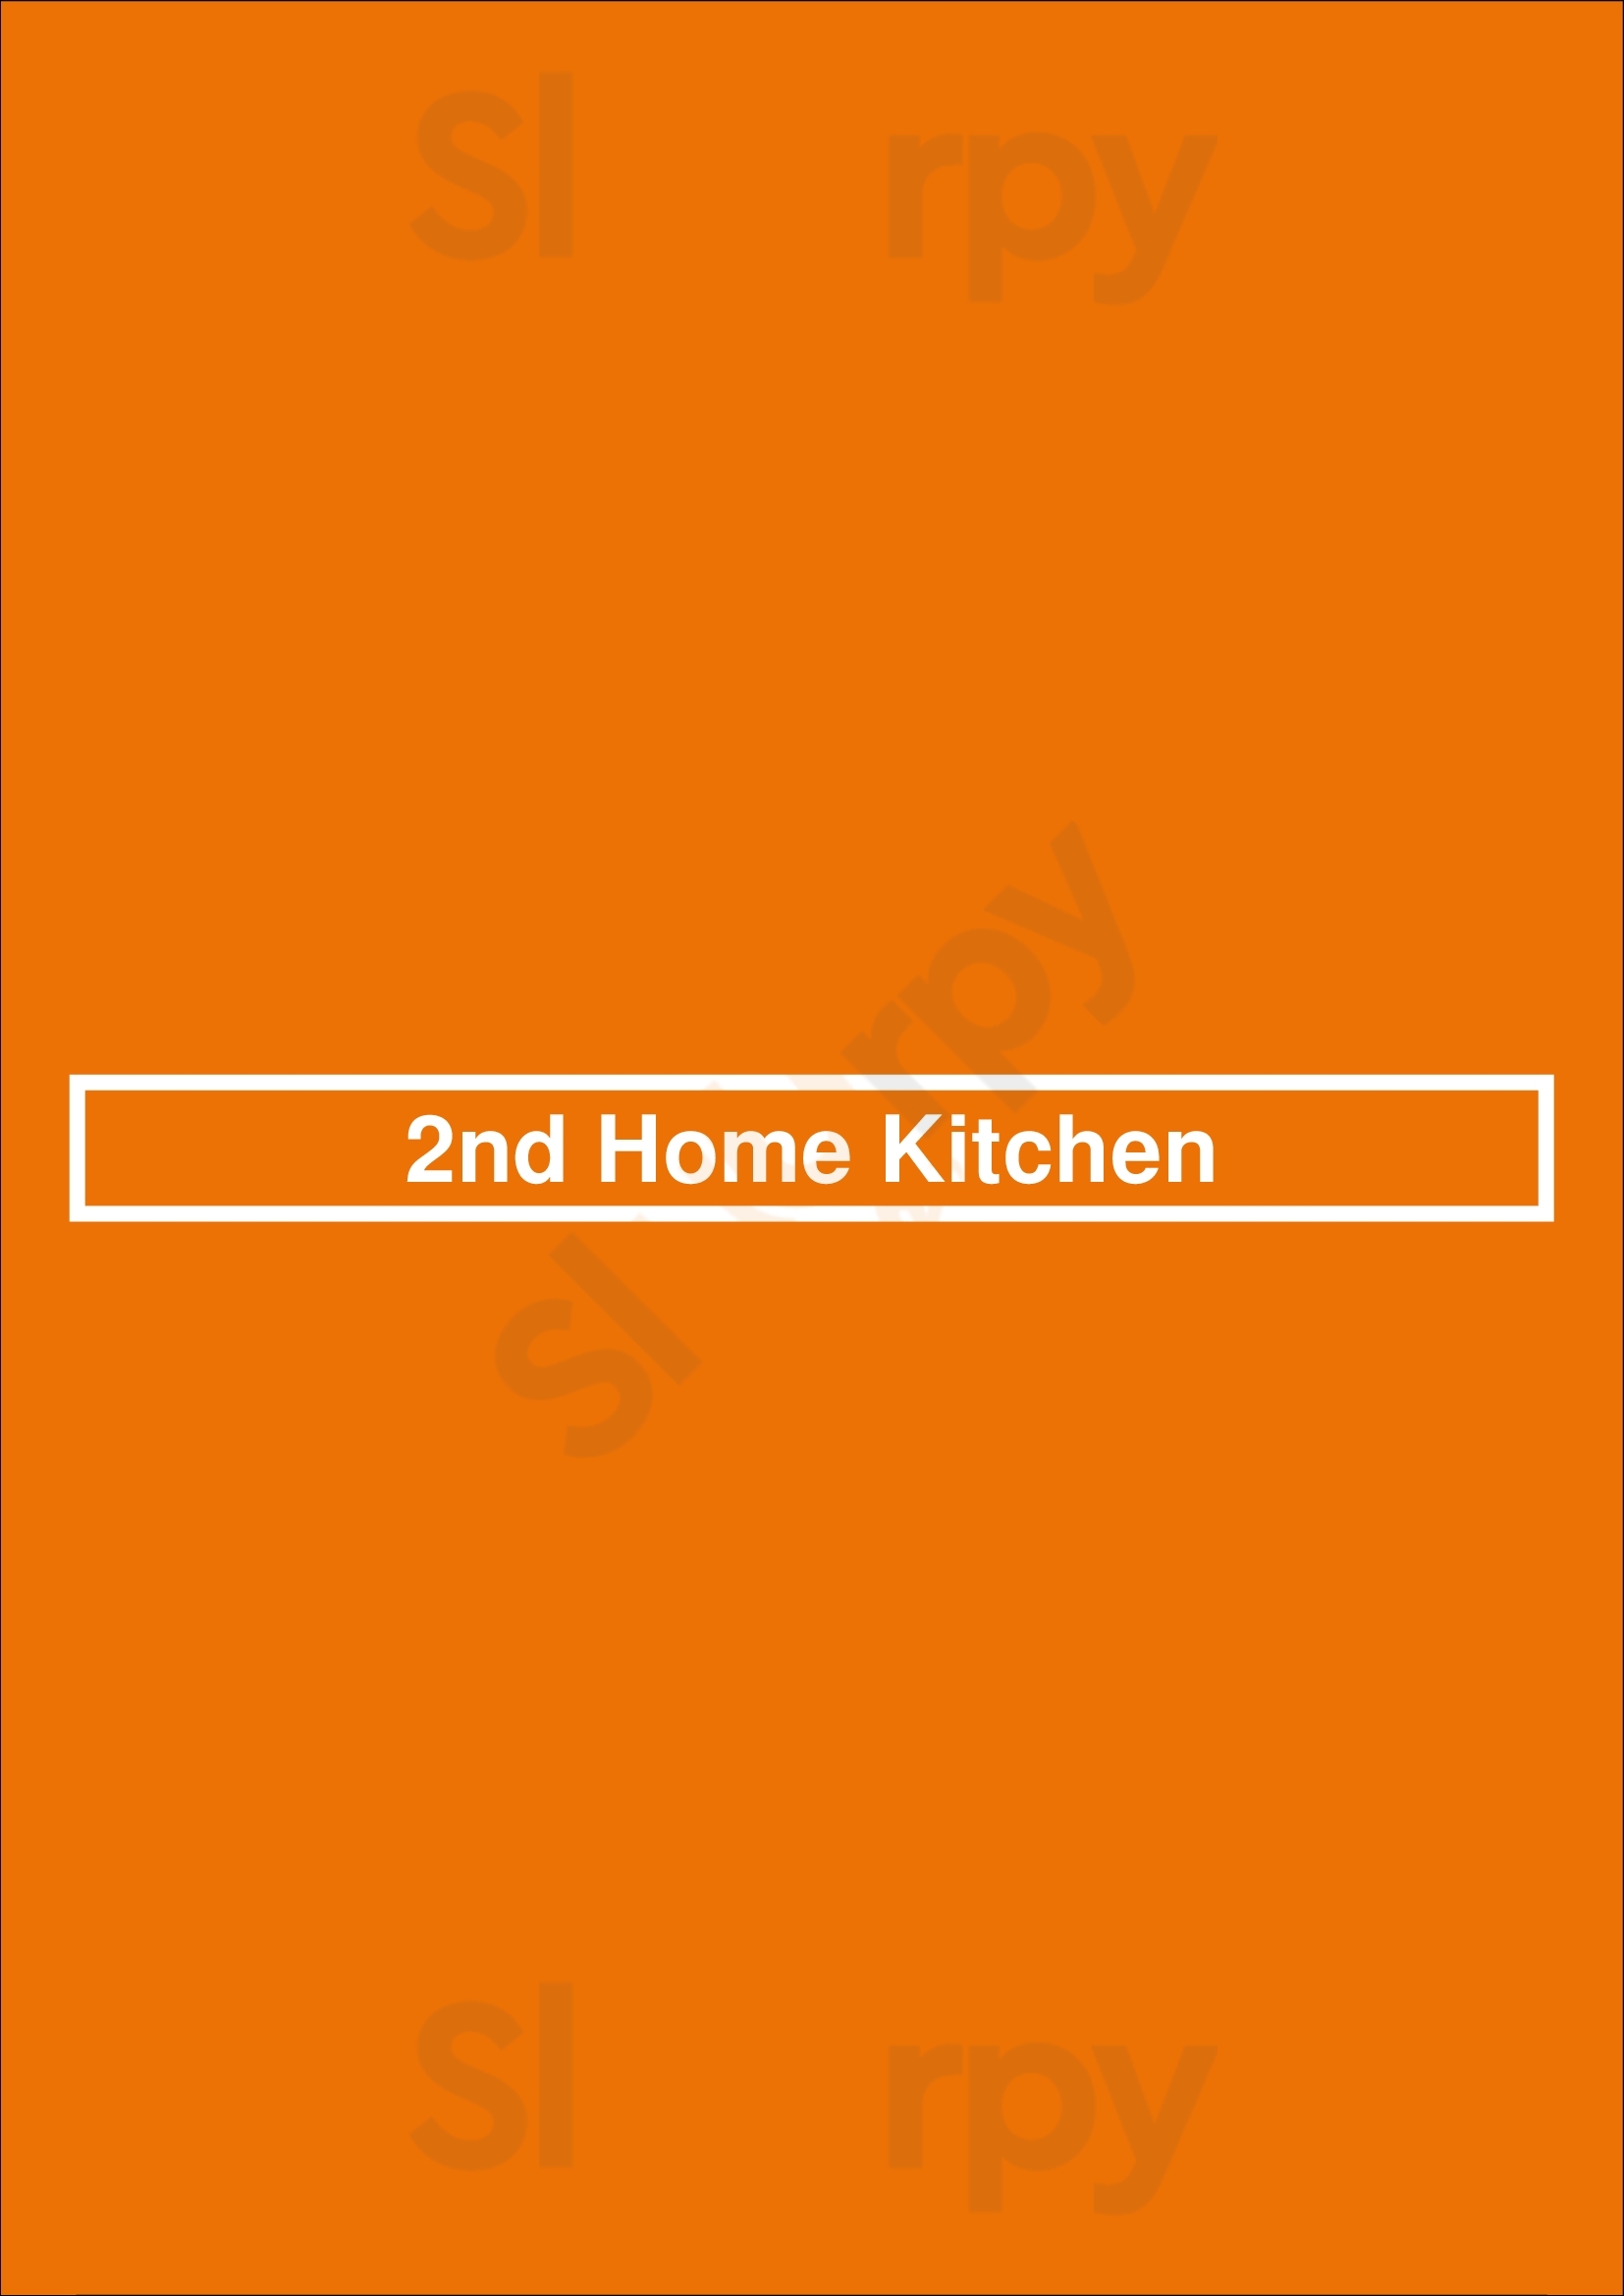 2nd Home Kitchen Newcastle upon Tyne Menu - 1